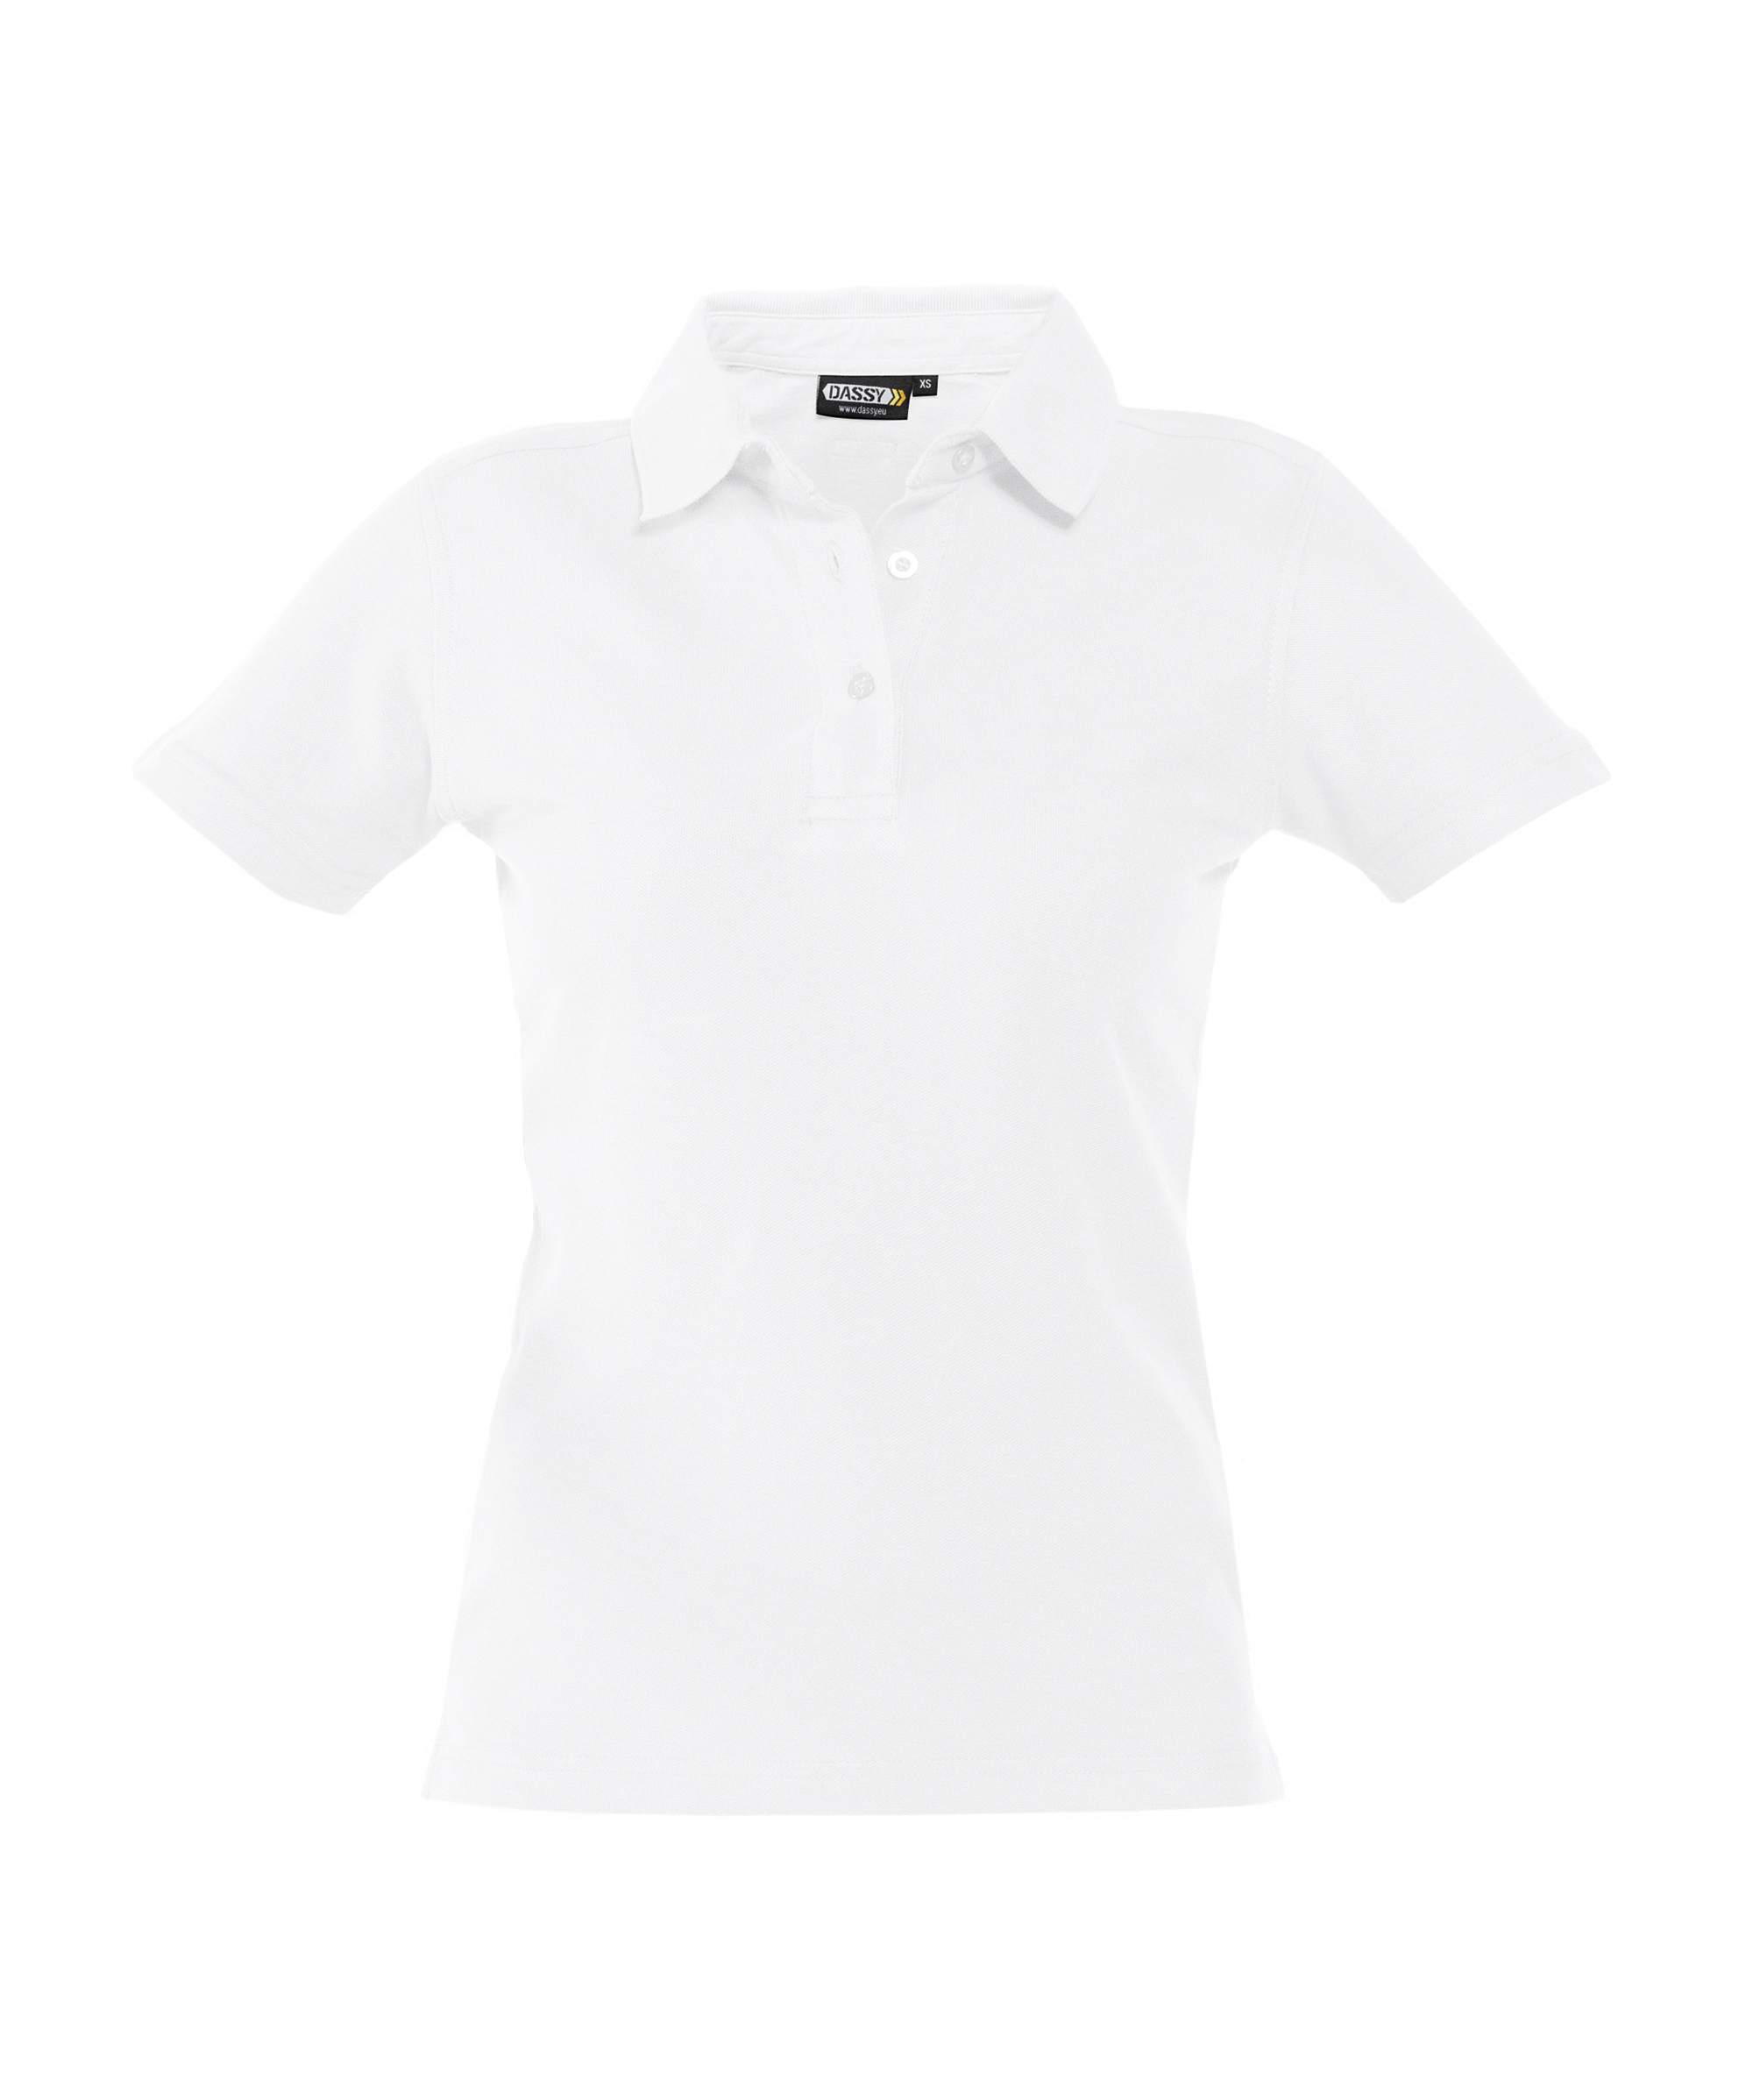 leon-women_polo-shirt_white_front.jpg